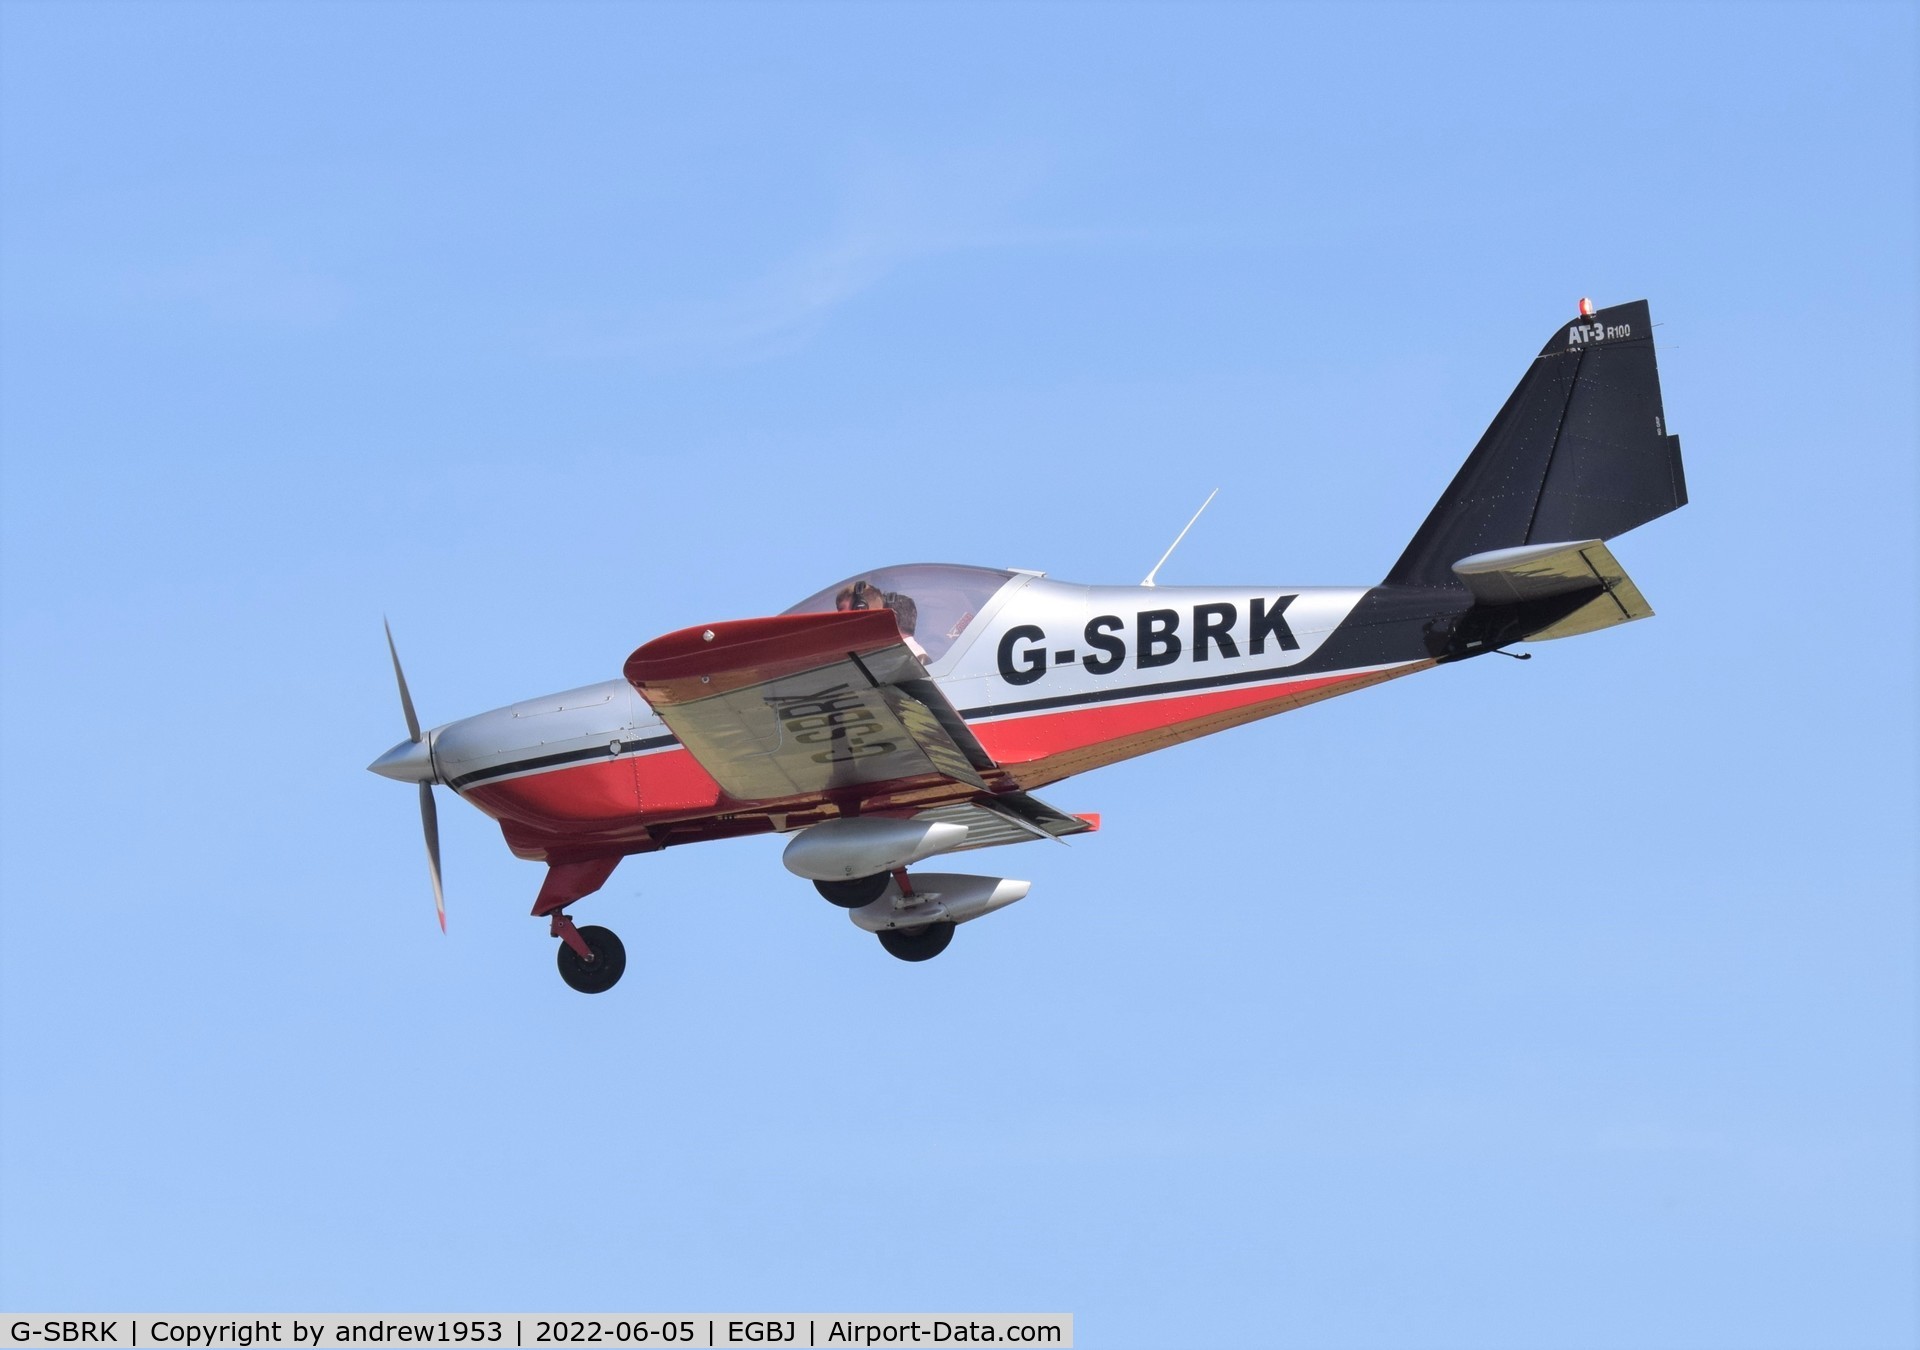 G-SBRK, 2007 Aero AT-3 R100 C/N AT3-021, G-SBRK at Gloucestershire Airport.